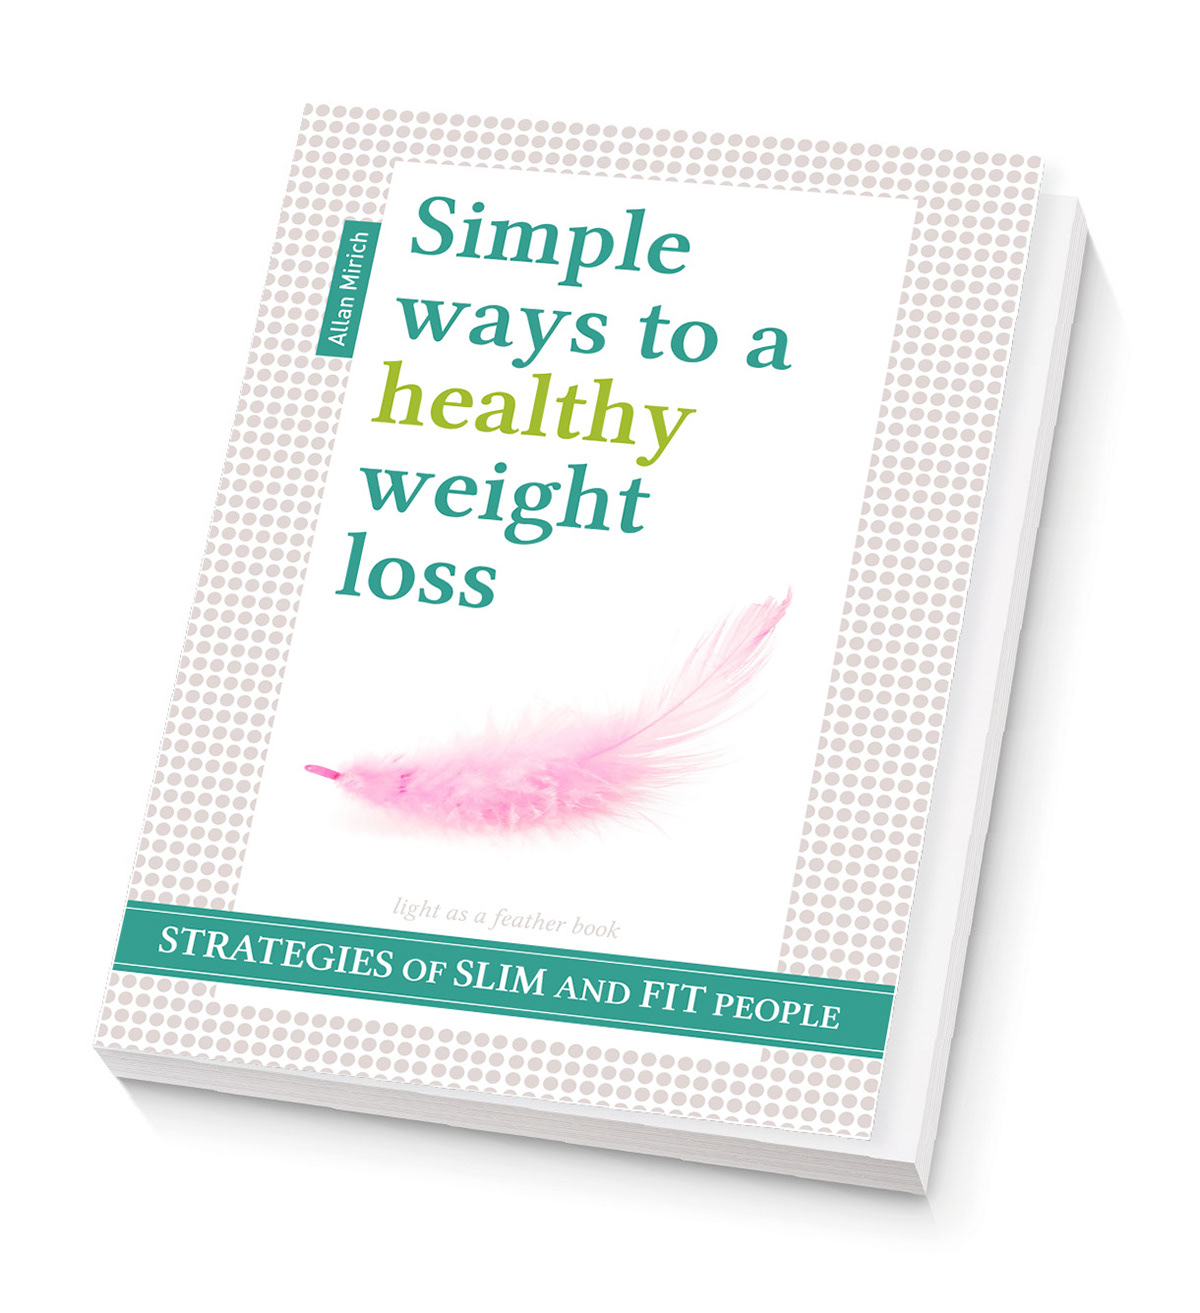 elegant book cover light simple healthy Weight loss Slim FIT zorica adamovic Zagreb Croatia